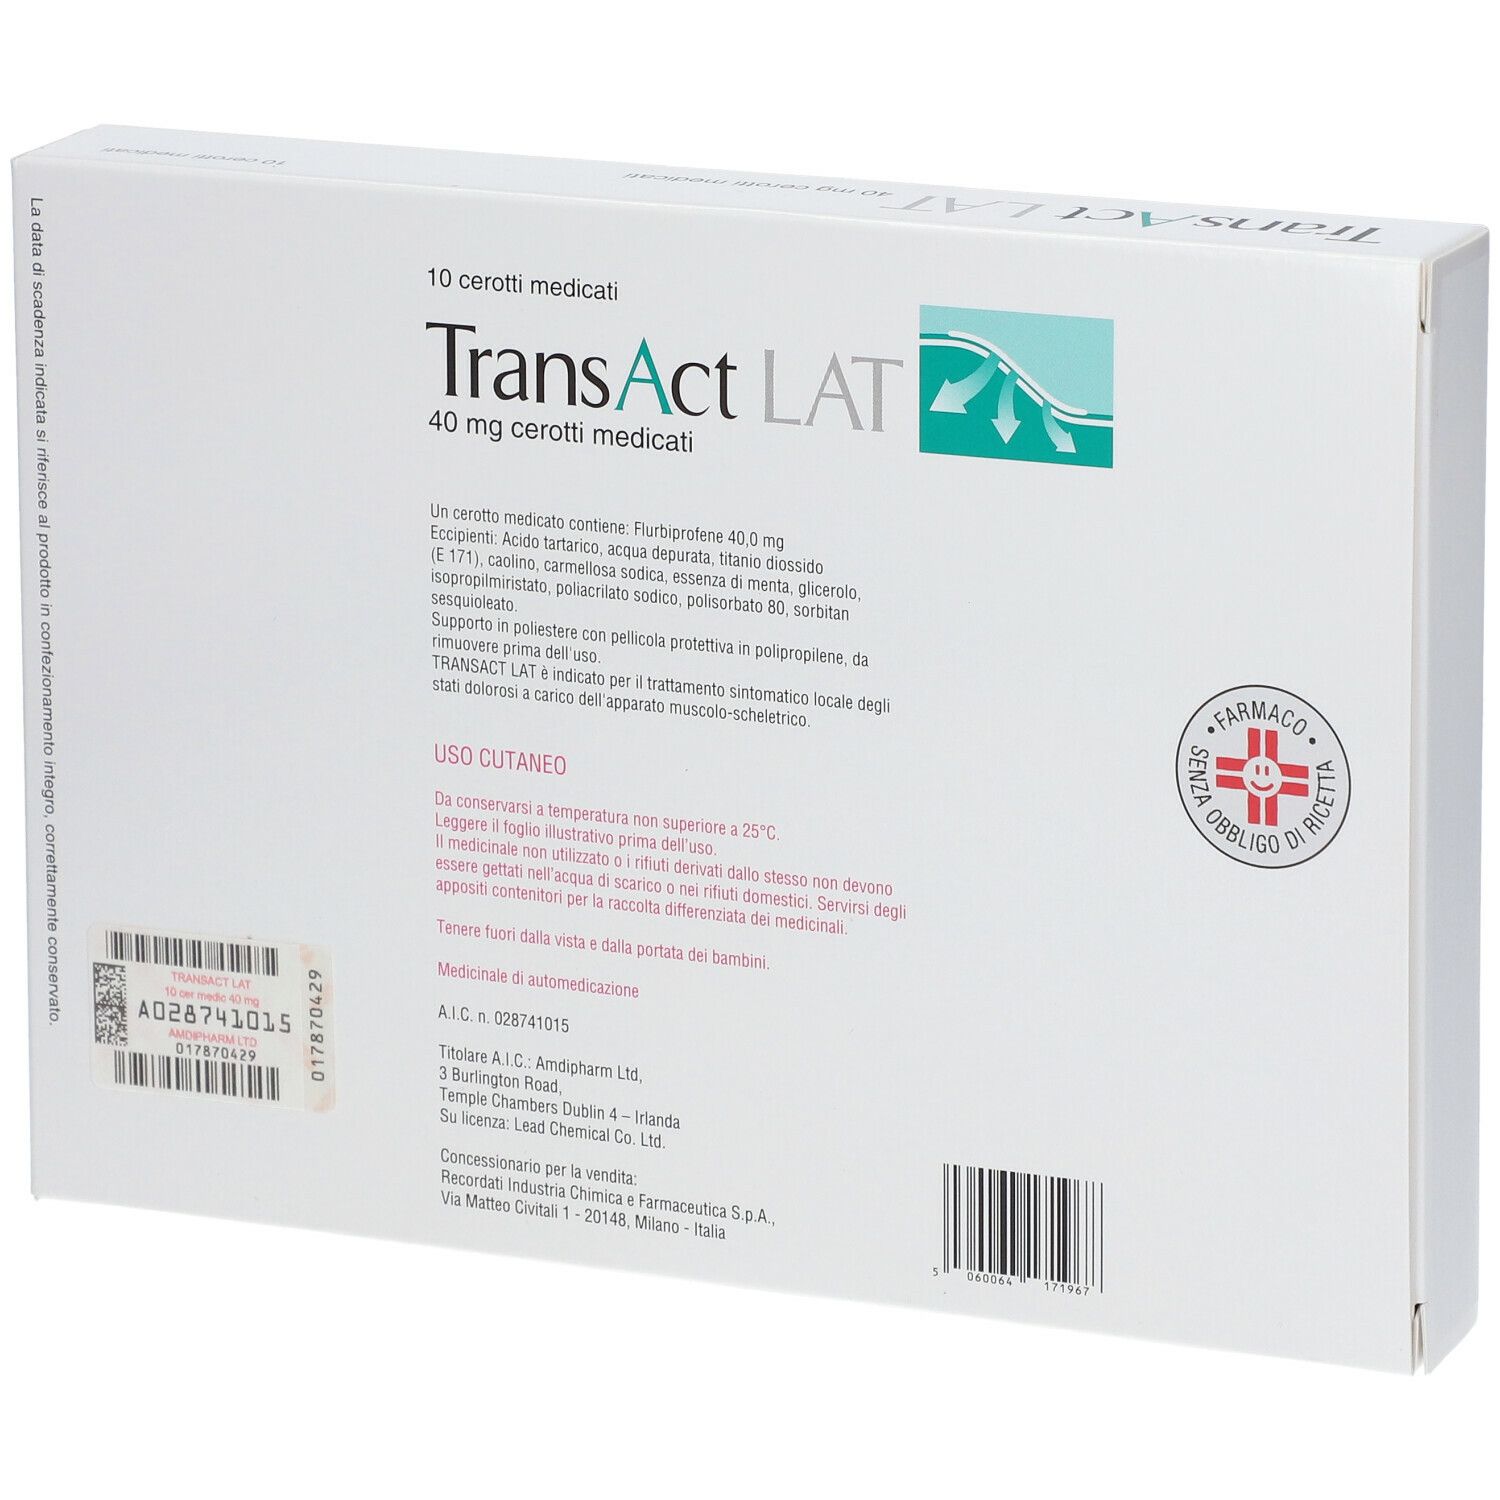 TransAct LAT cerotti medicati Flurbriprofene